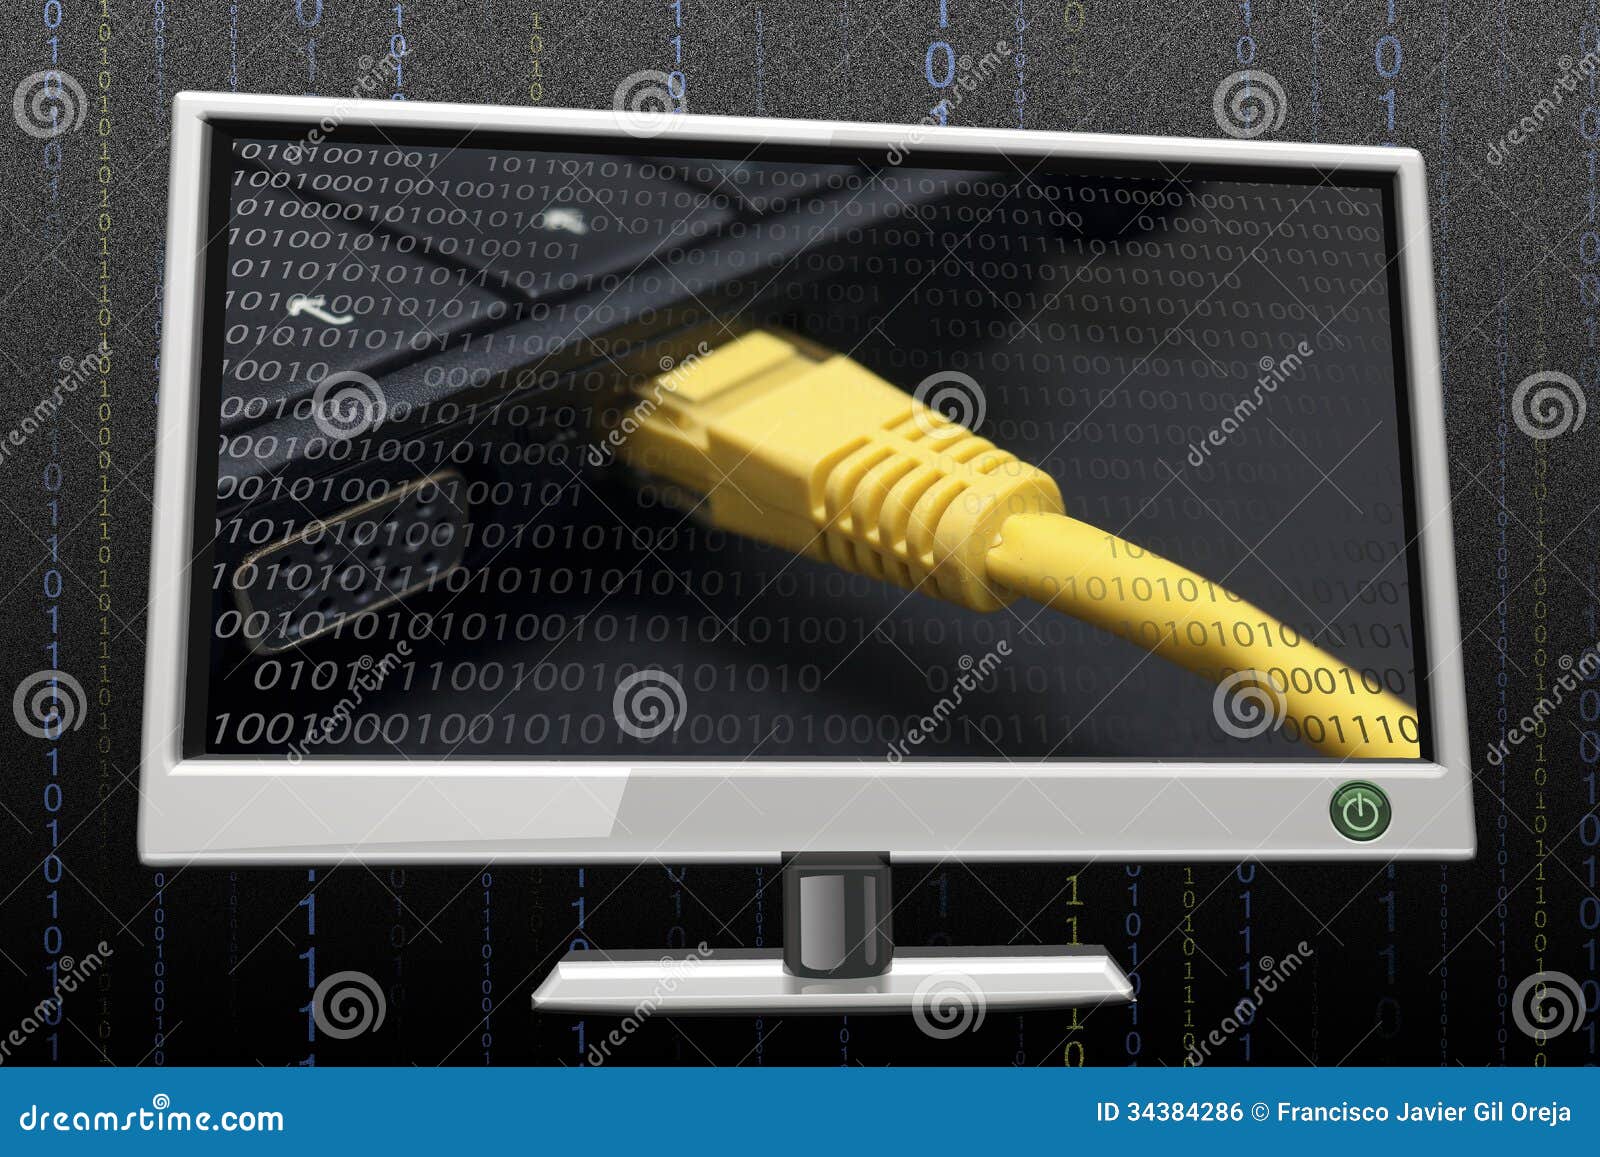 detail of net conexion